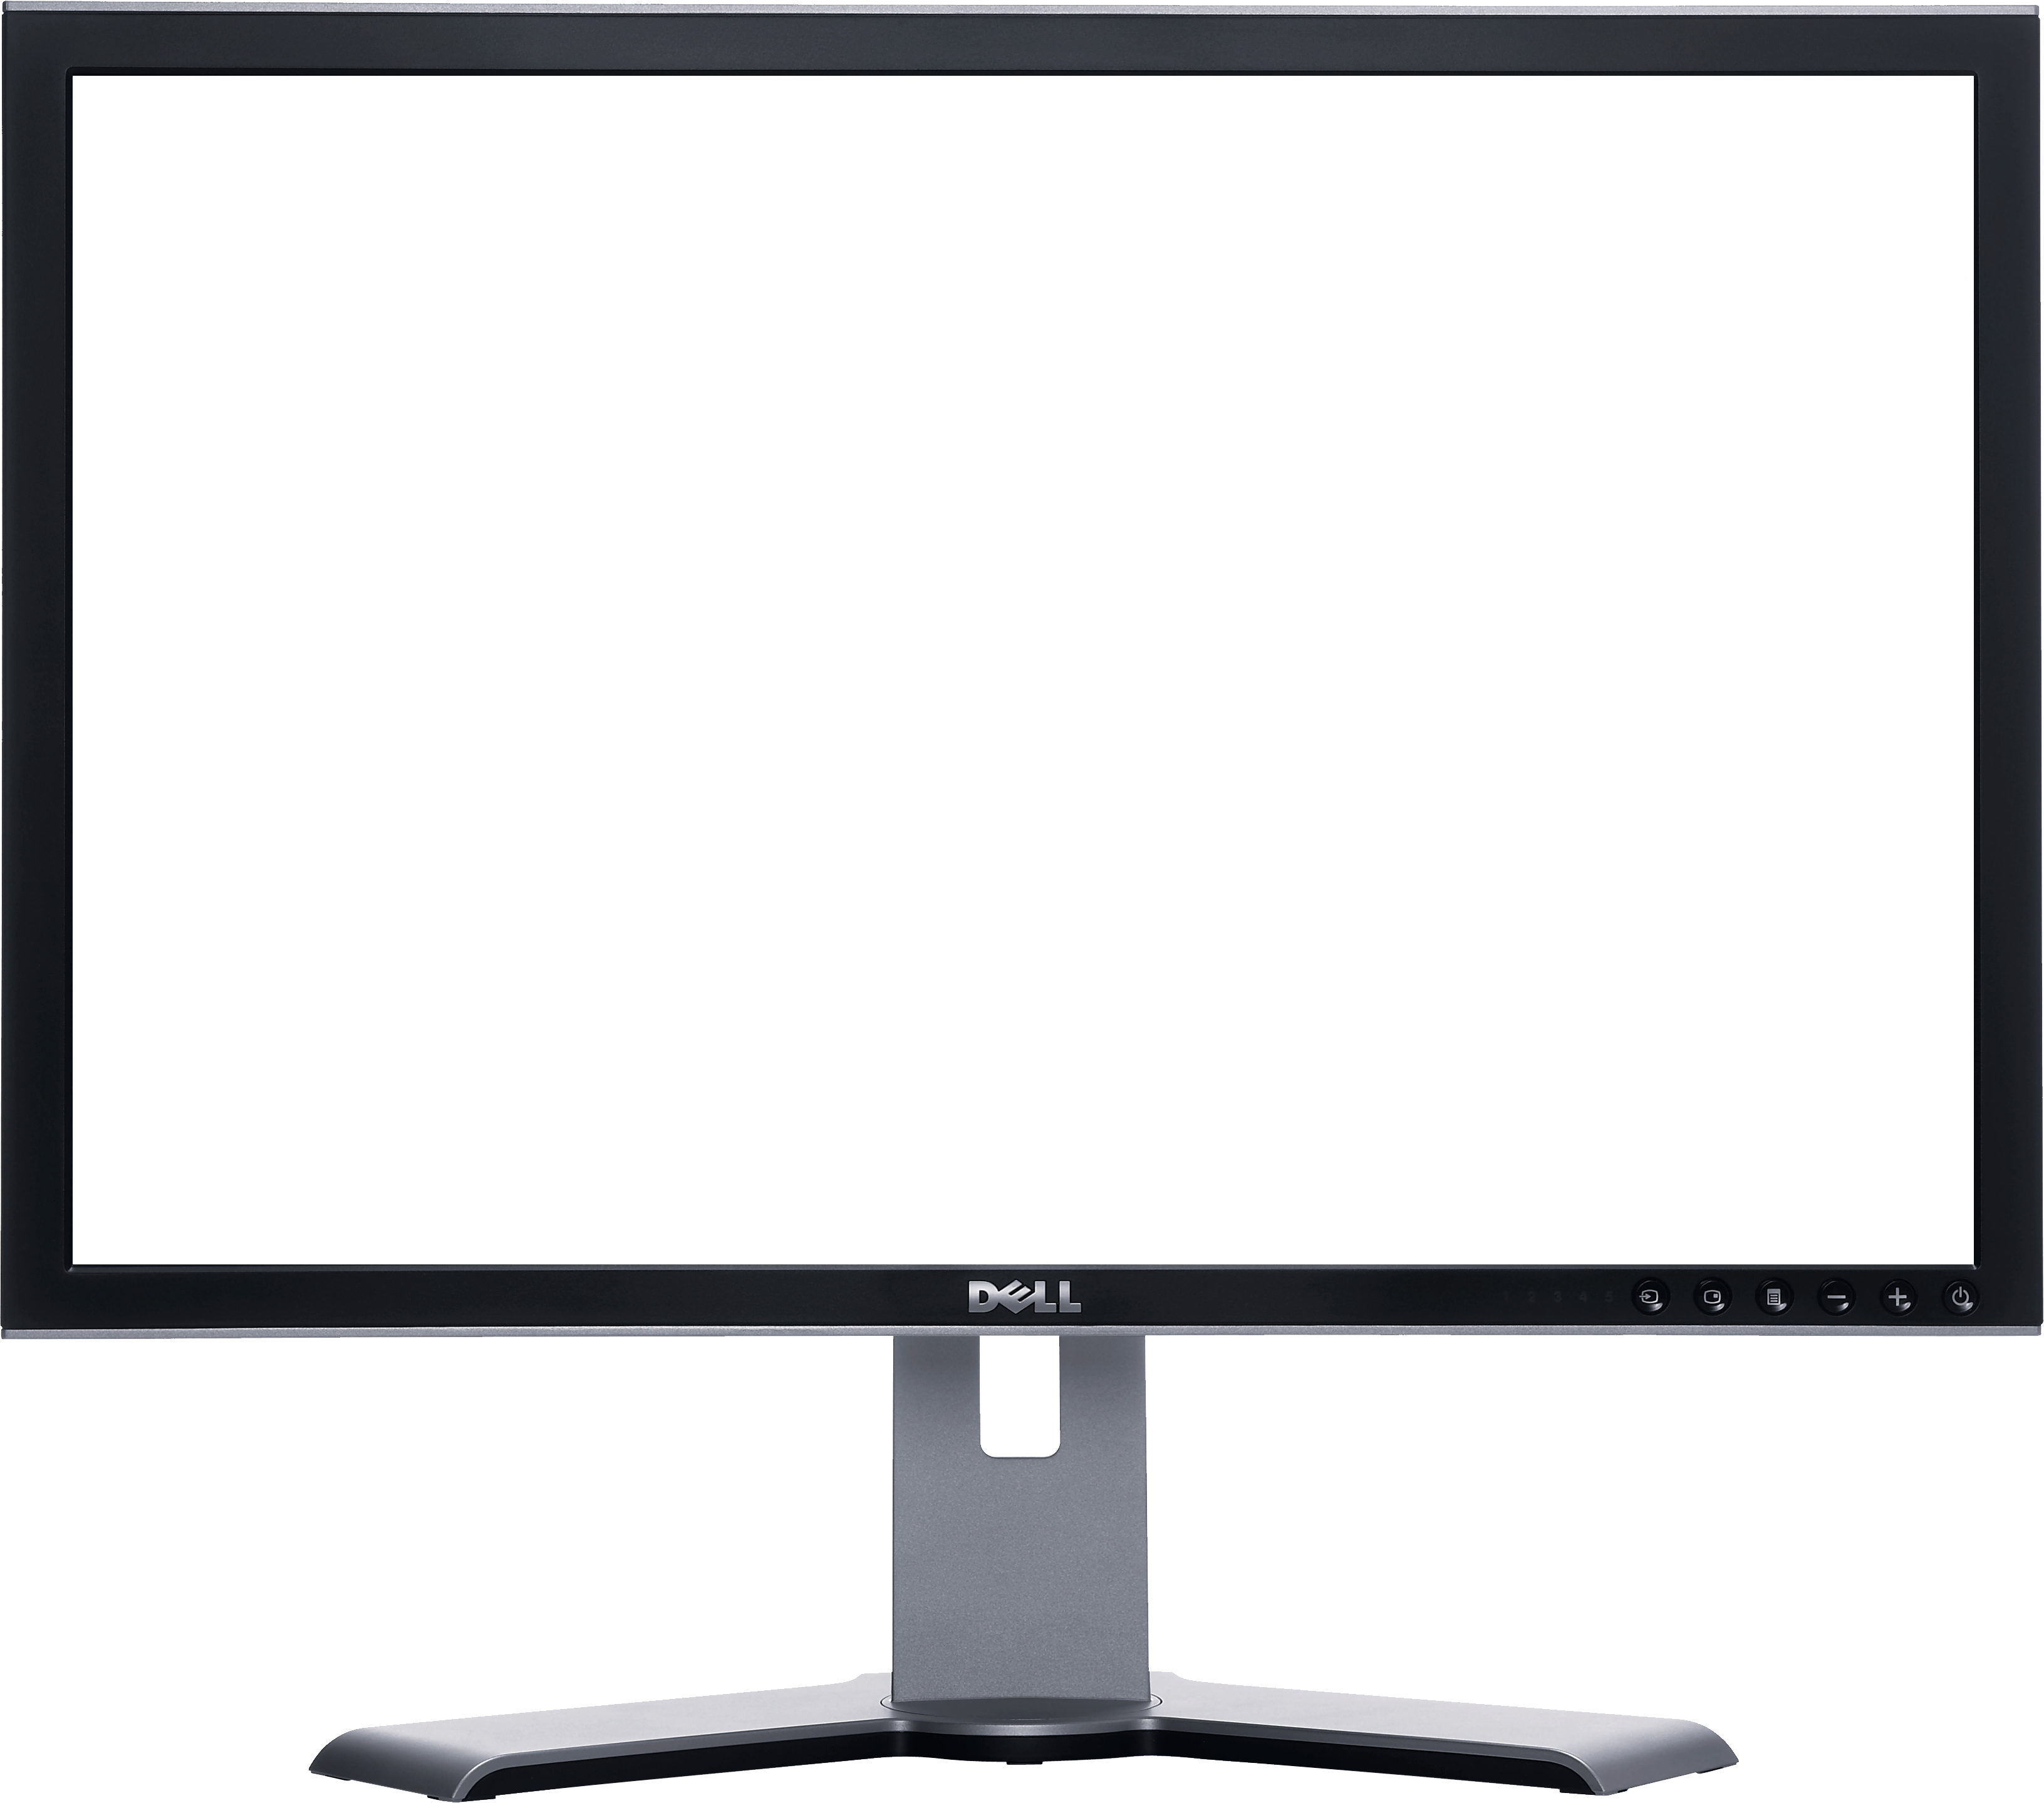 computer screen clipart